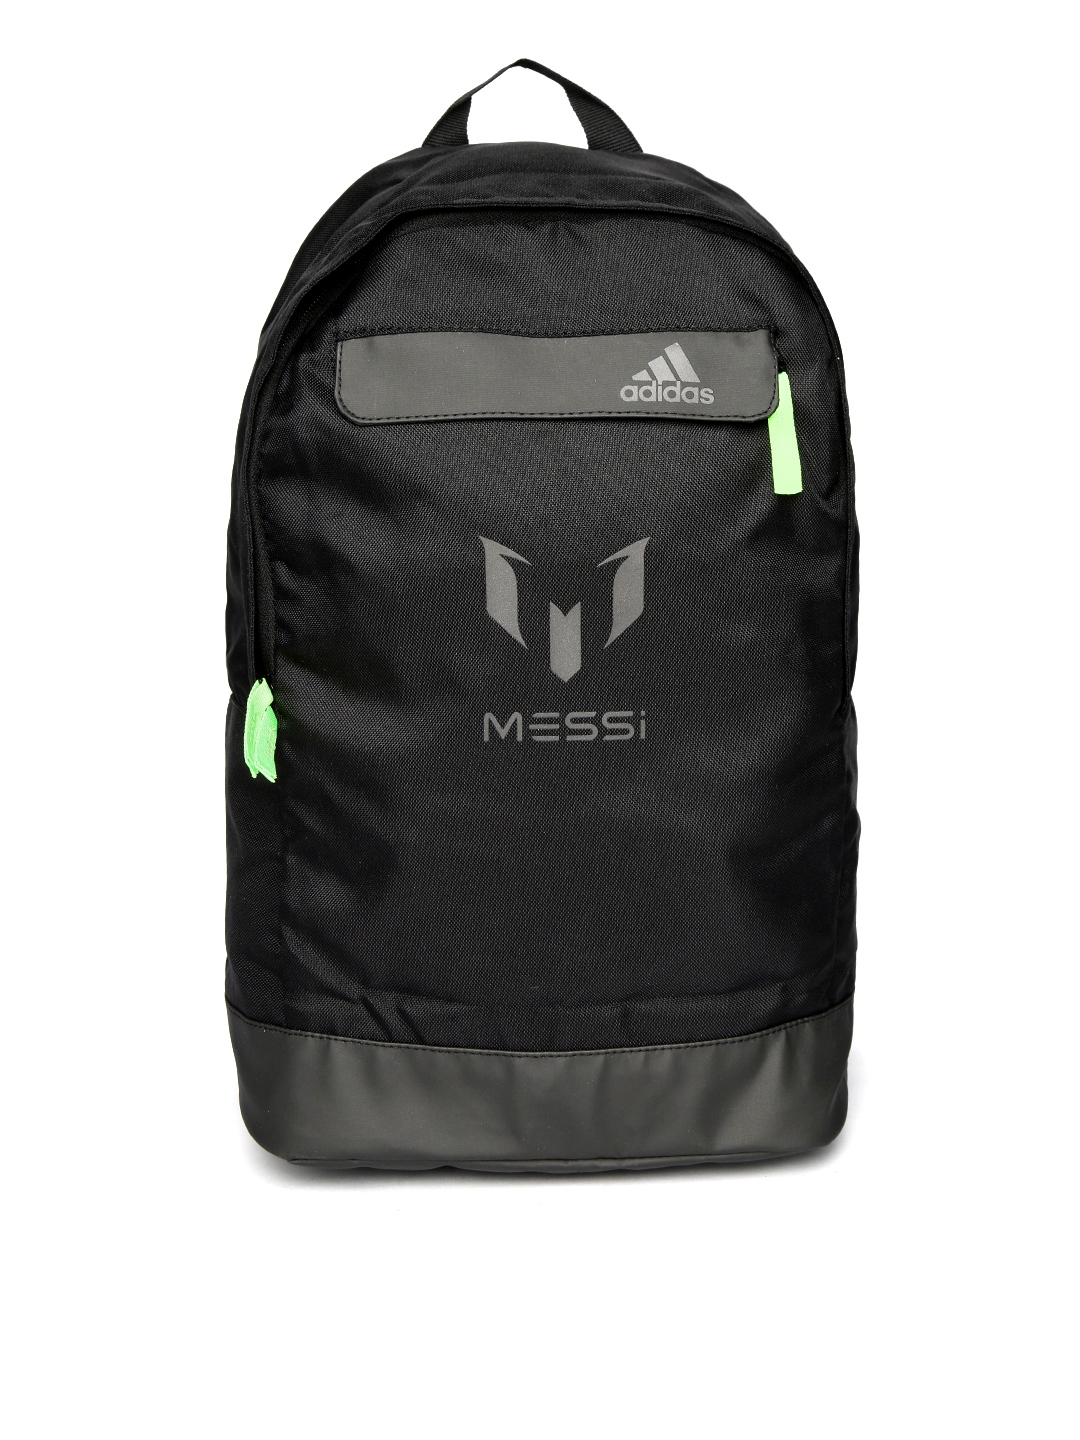 Buy ADIDAS Kids Black Messi Backpack - Backpacks for Unisex Kids 7587072 |  Myntra